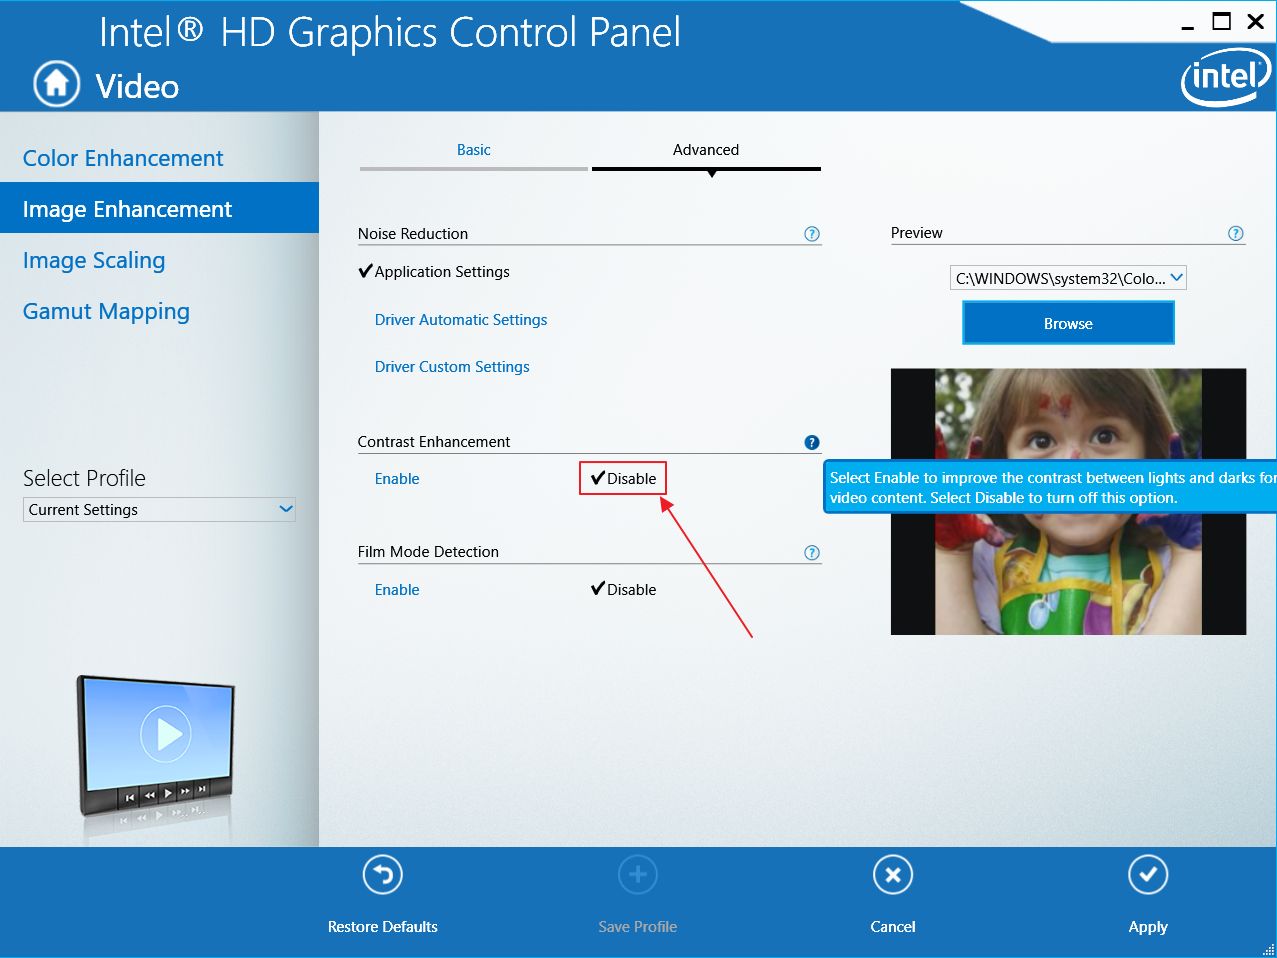 Intel hd graphics control panel contrast enhancement